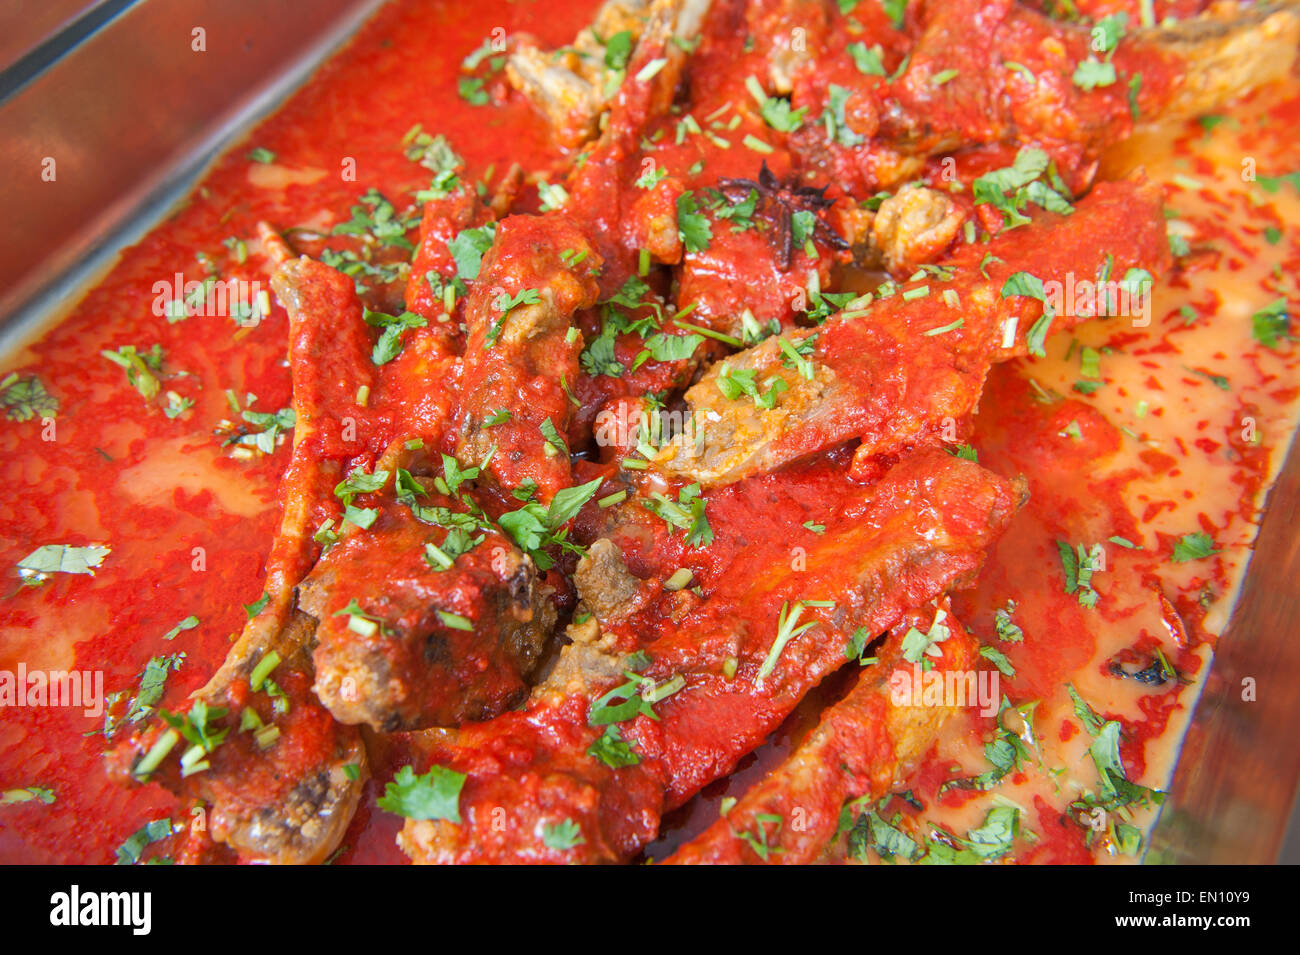 Closeup detail of gosht rogan josh meal on display at an indian restaurant buffet Stock Photo